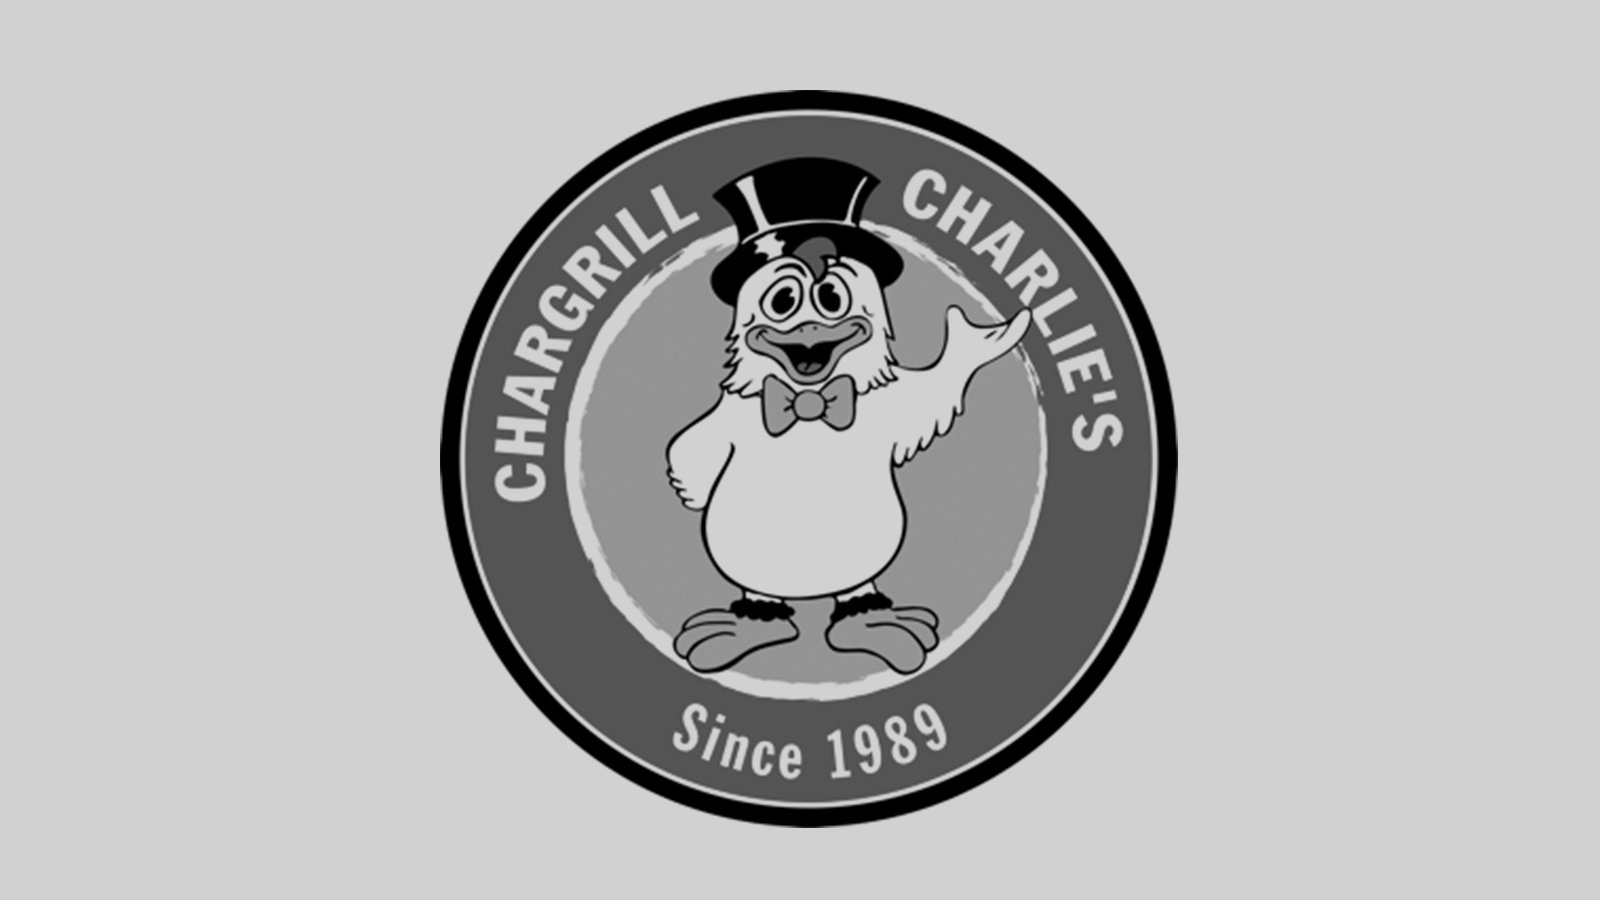 Chargrill-Charlies-Logo-Grey-BG-1.jpg